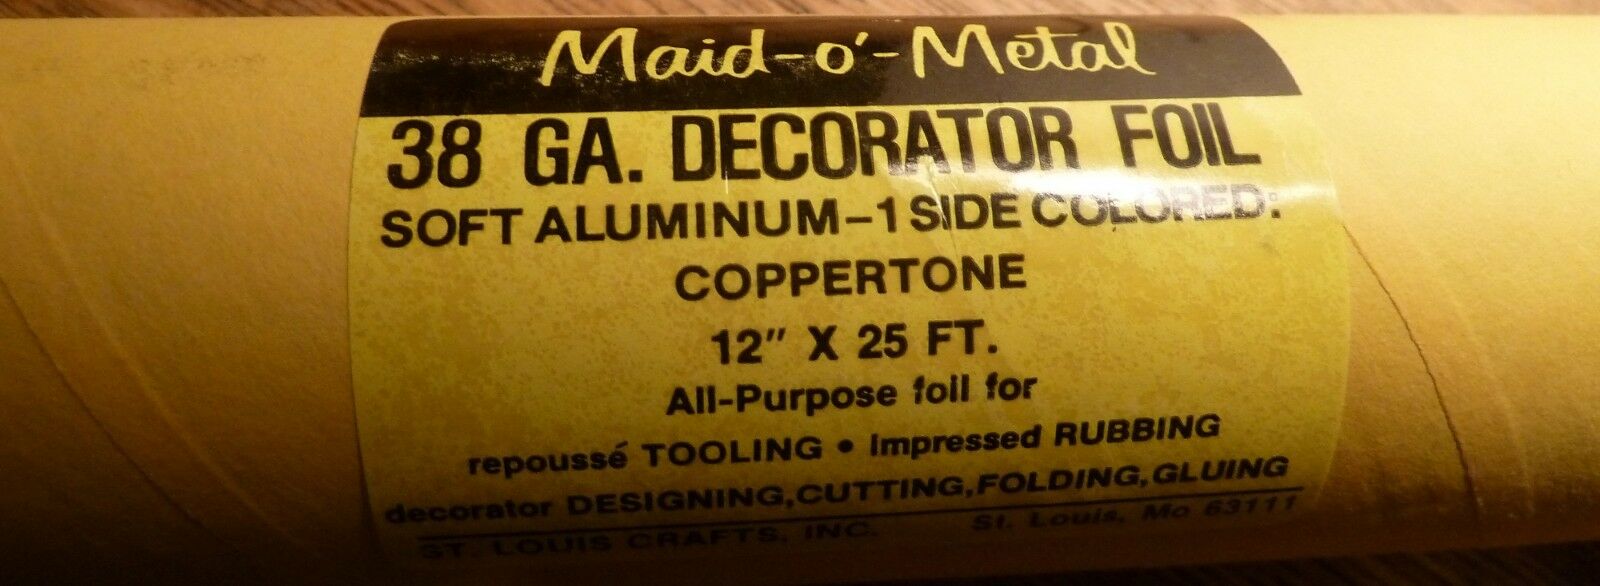 Maid-O'-Metal 38 Ga. Decorator Foil One side coppertone - partial good roll